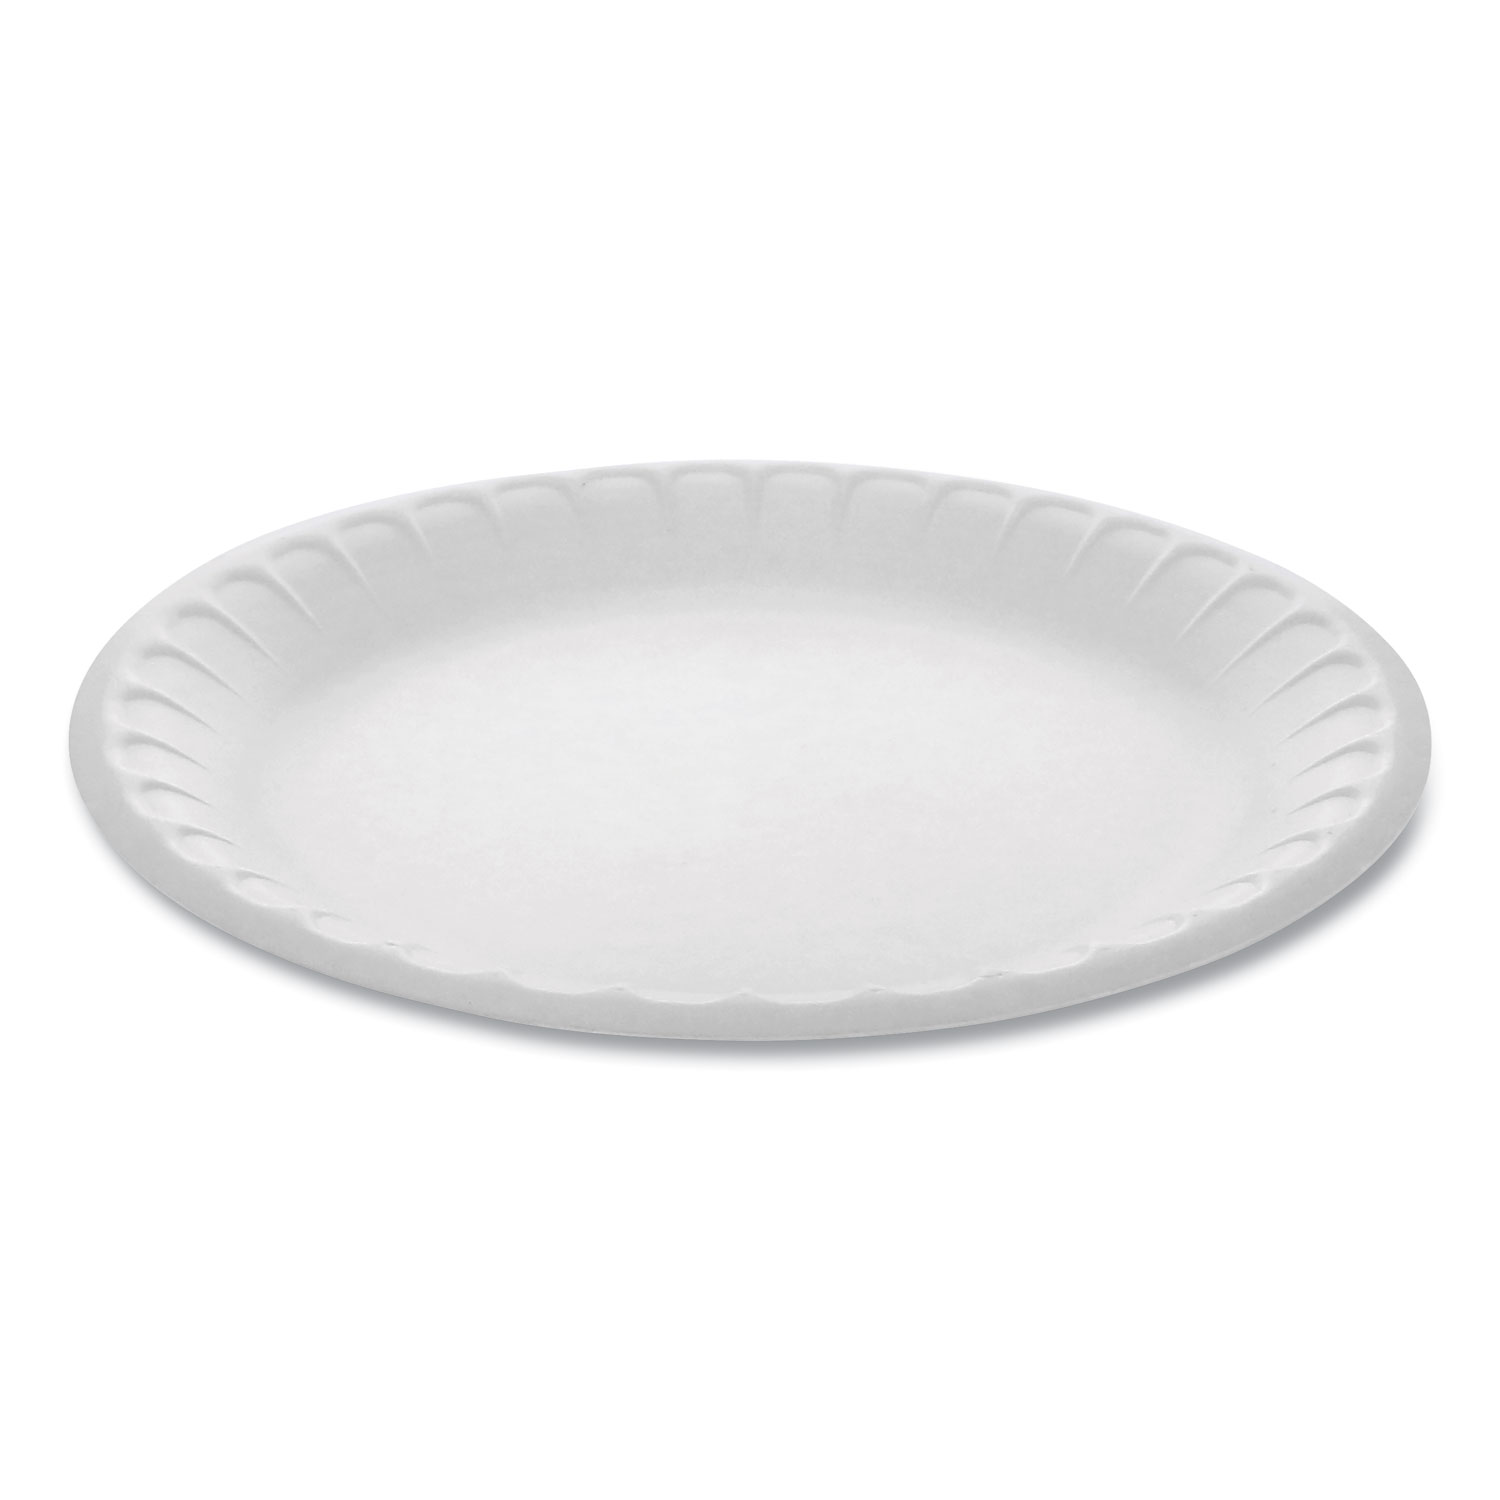  Pactiv 0TH100090000 Unlaminated Foam Dinnerware, Plate, 9 Diameter, White, 500/Carton (PCT0TH10009) 